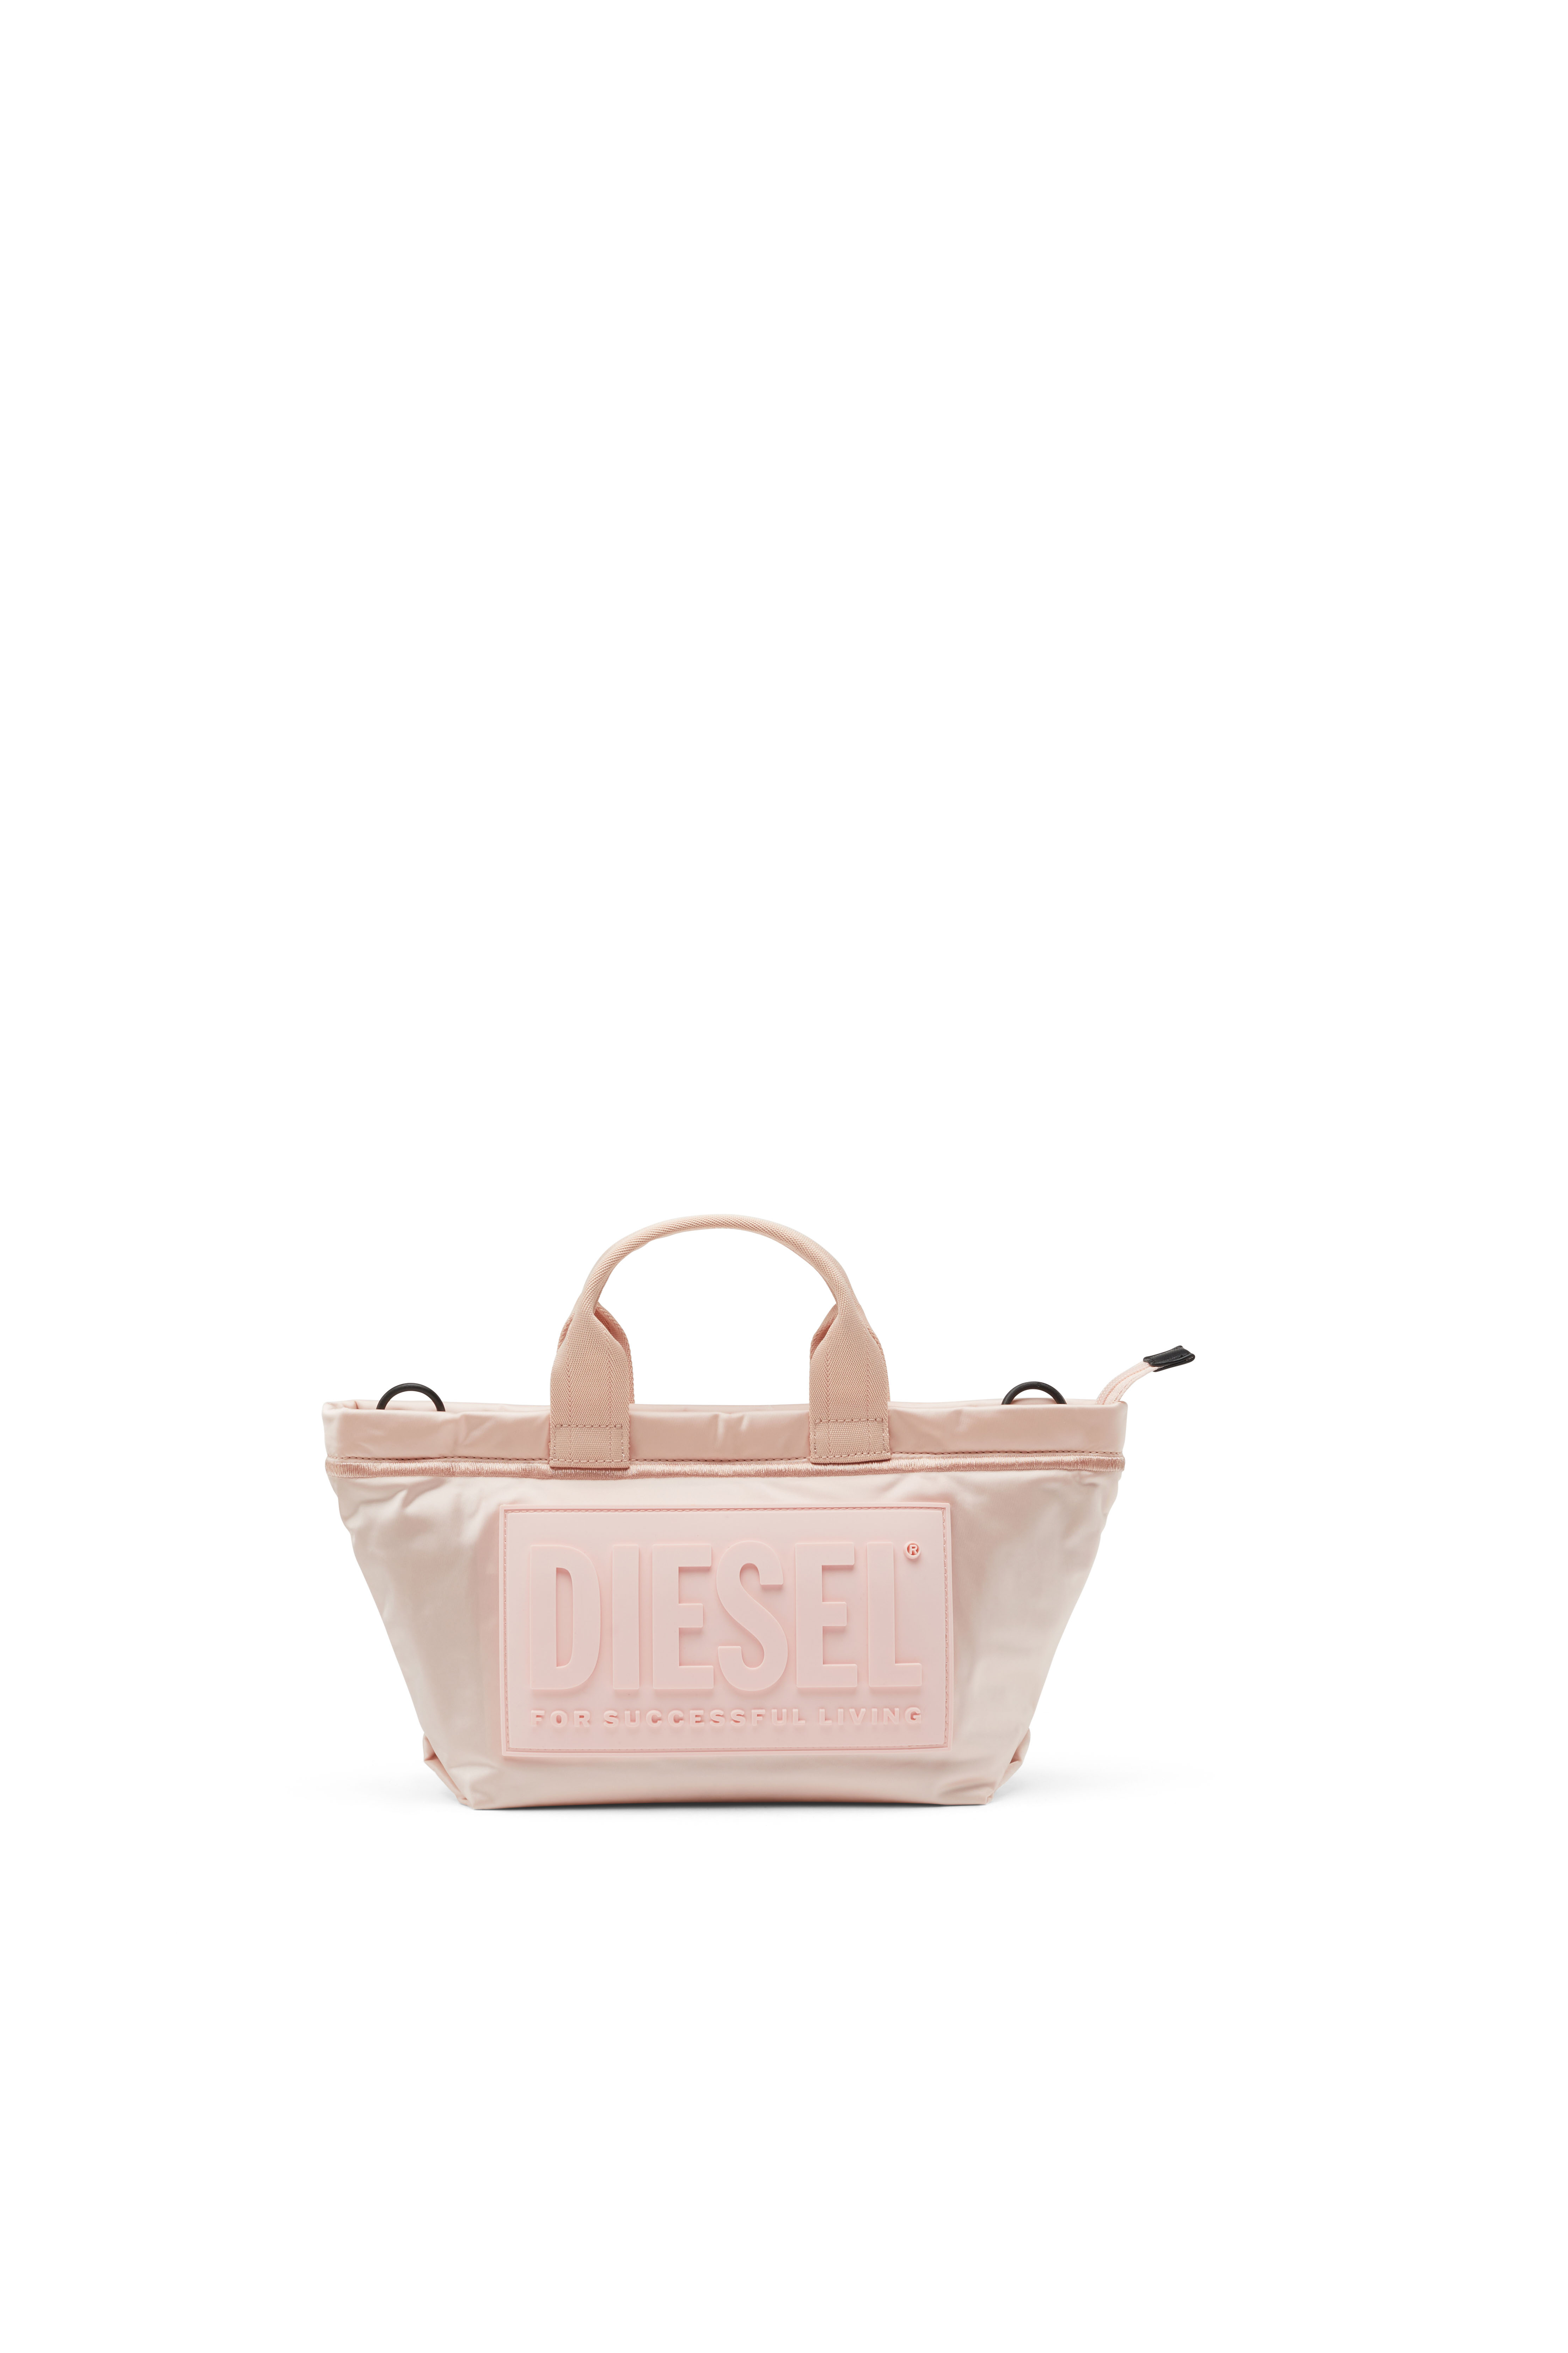 Diesel - HANDYE, ピンク / ホワイト - Image 1